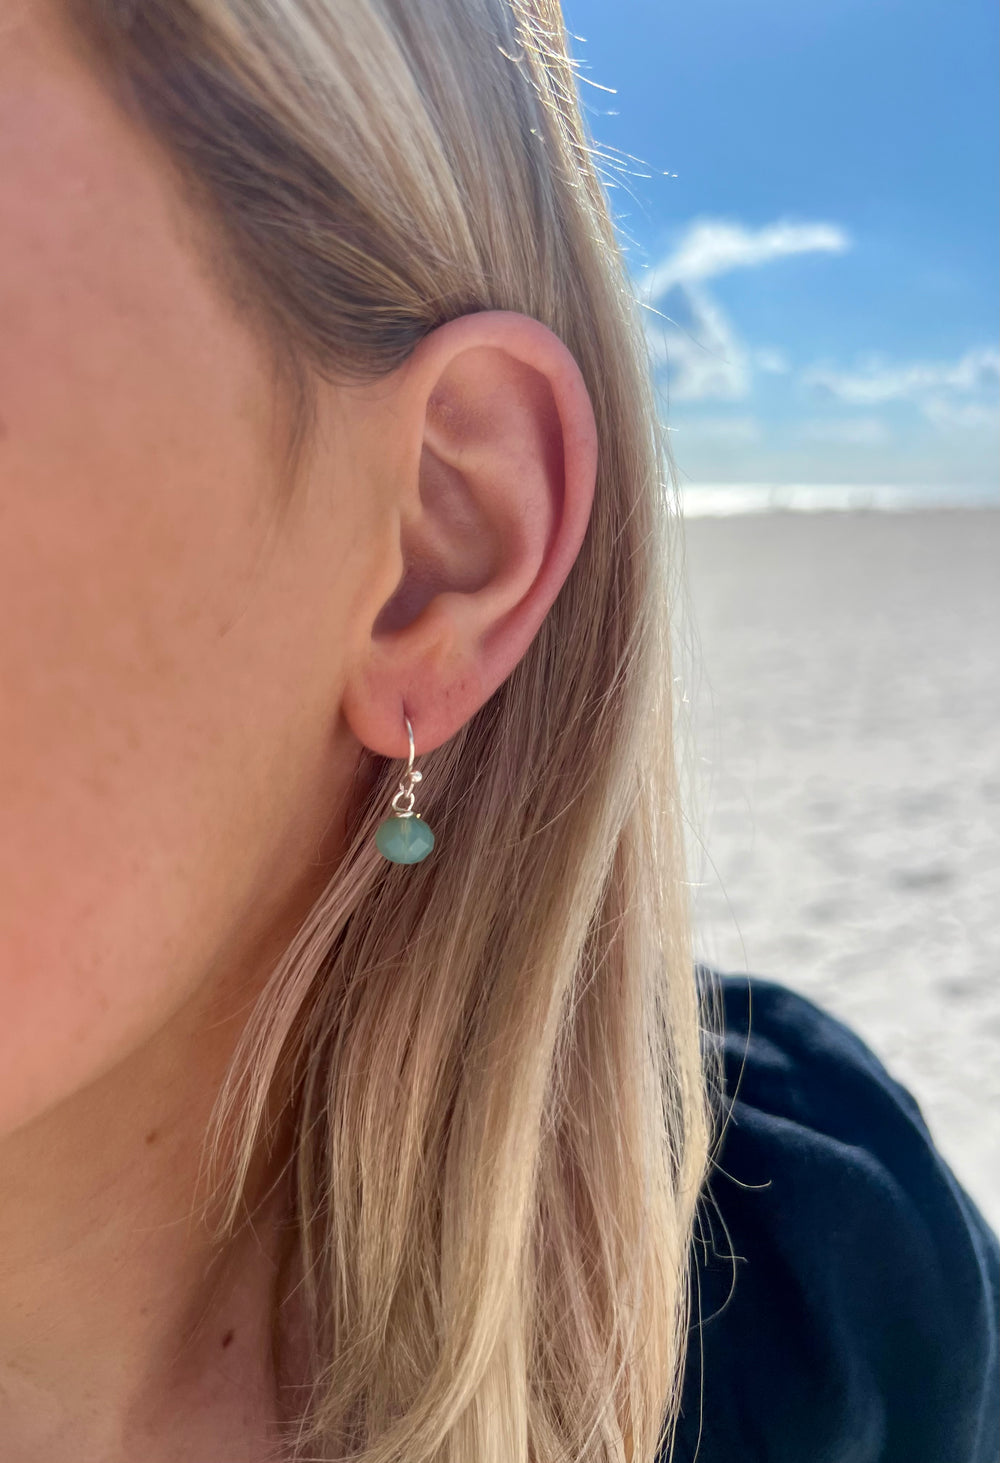 Cara Silver handmade earrings with aqua bead detail in ear